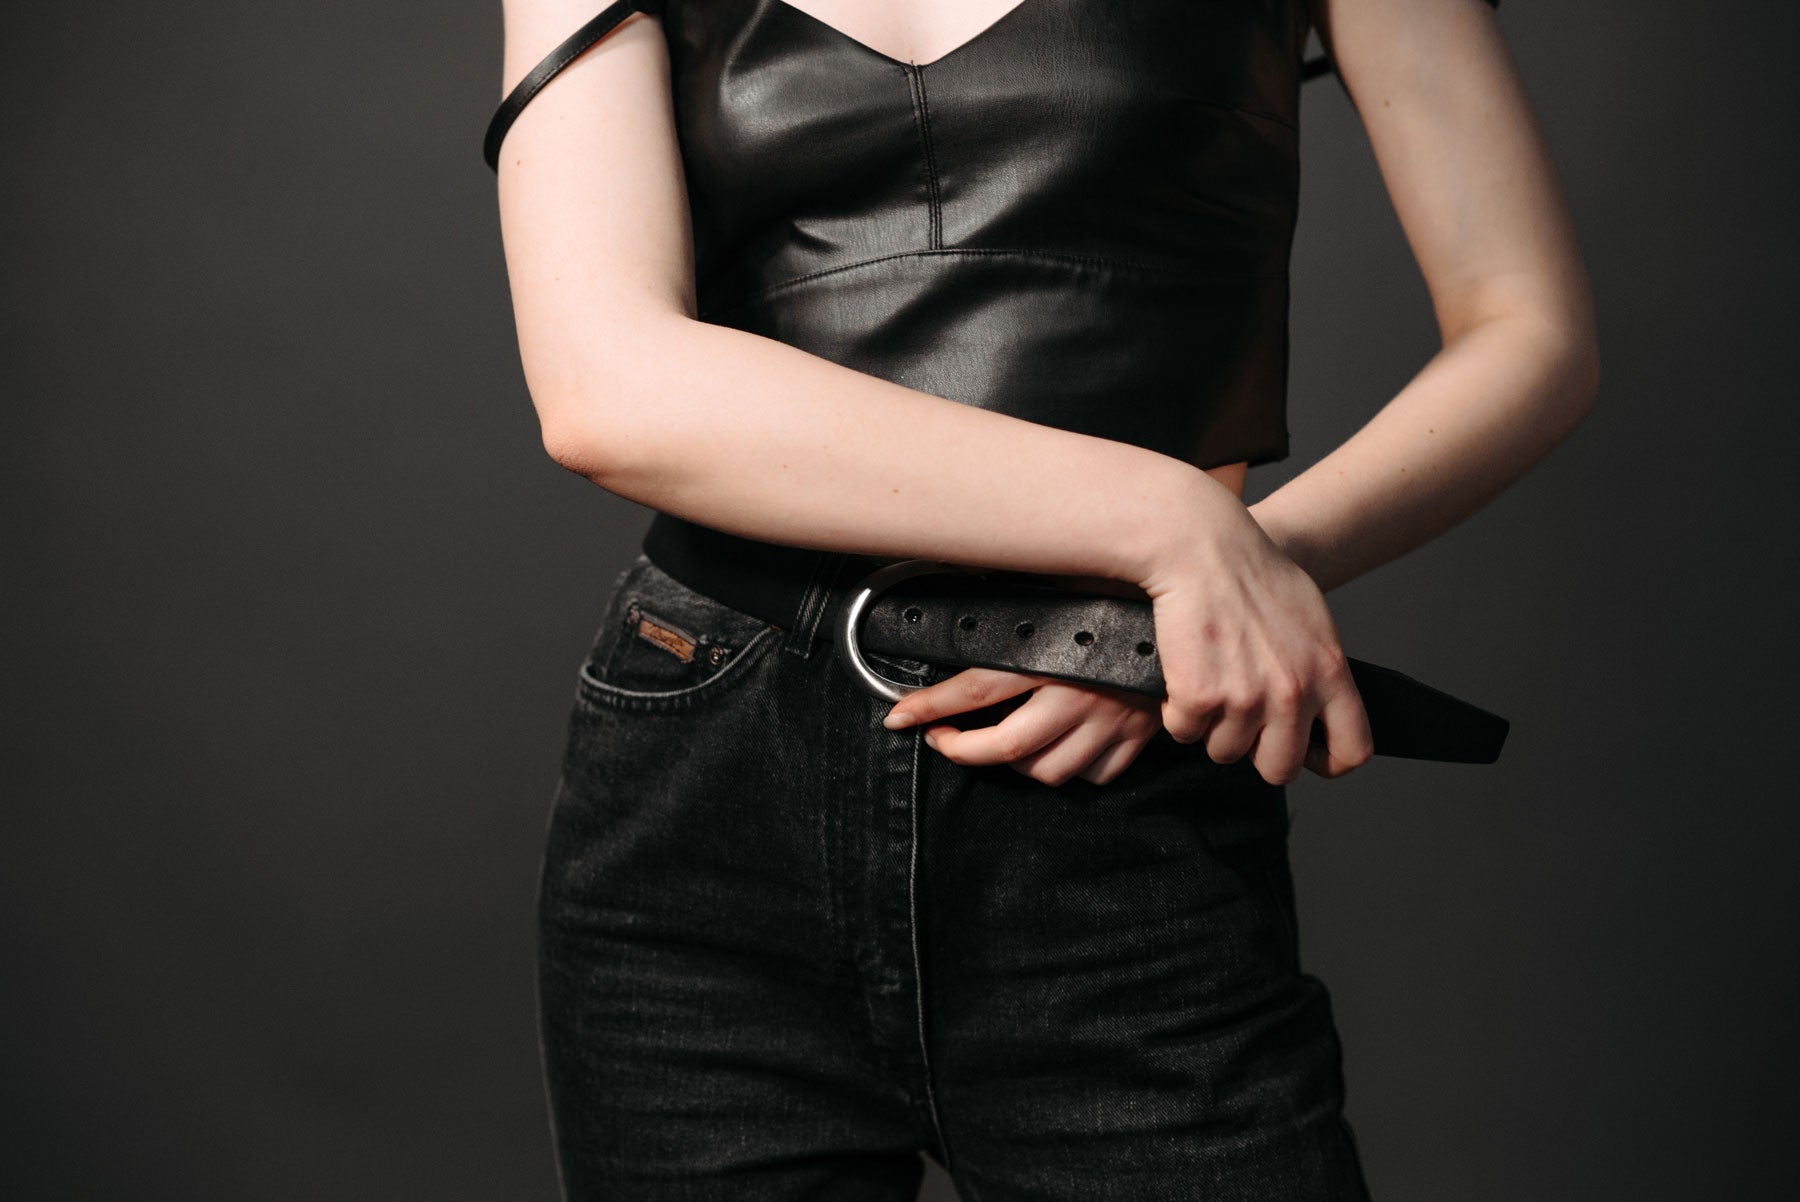 PEROZ-Women's-Leather-Belts | Fashion Accessories Australia